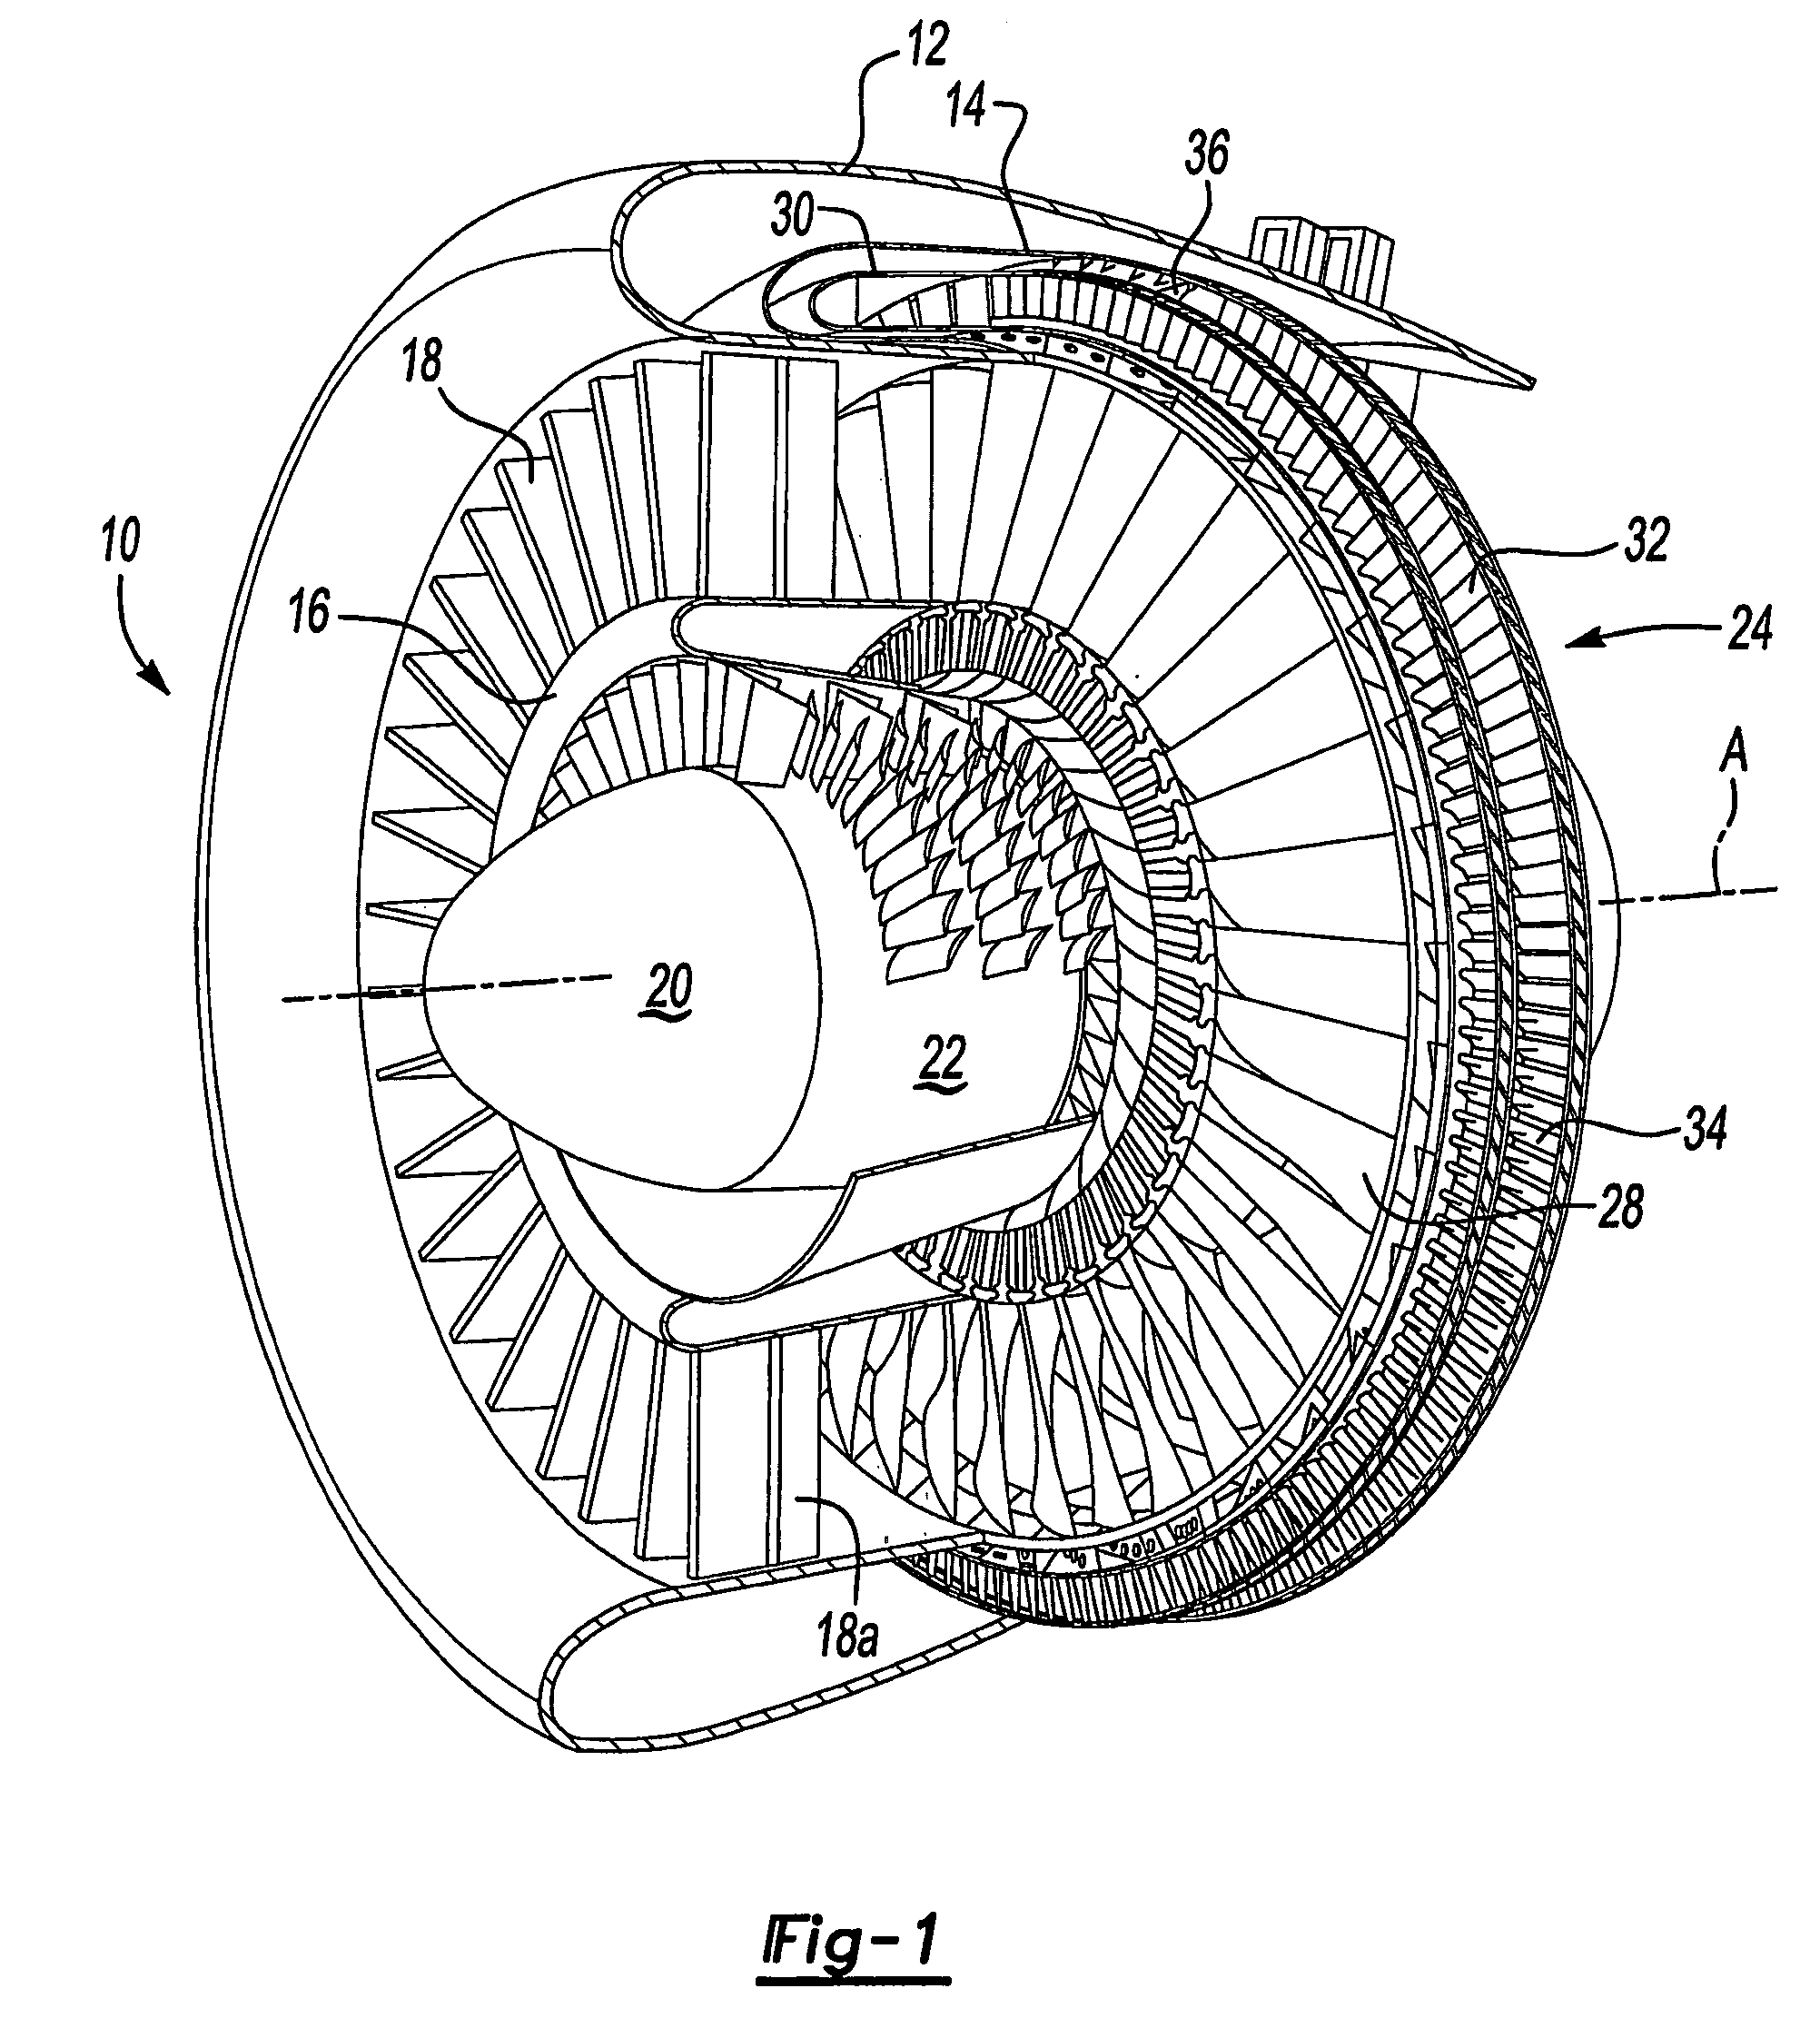 Image in Patent Document